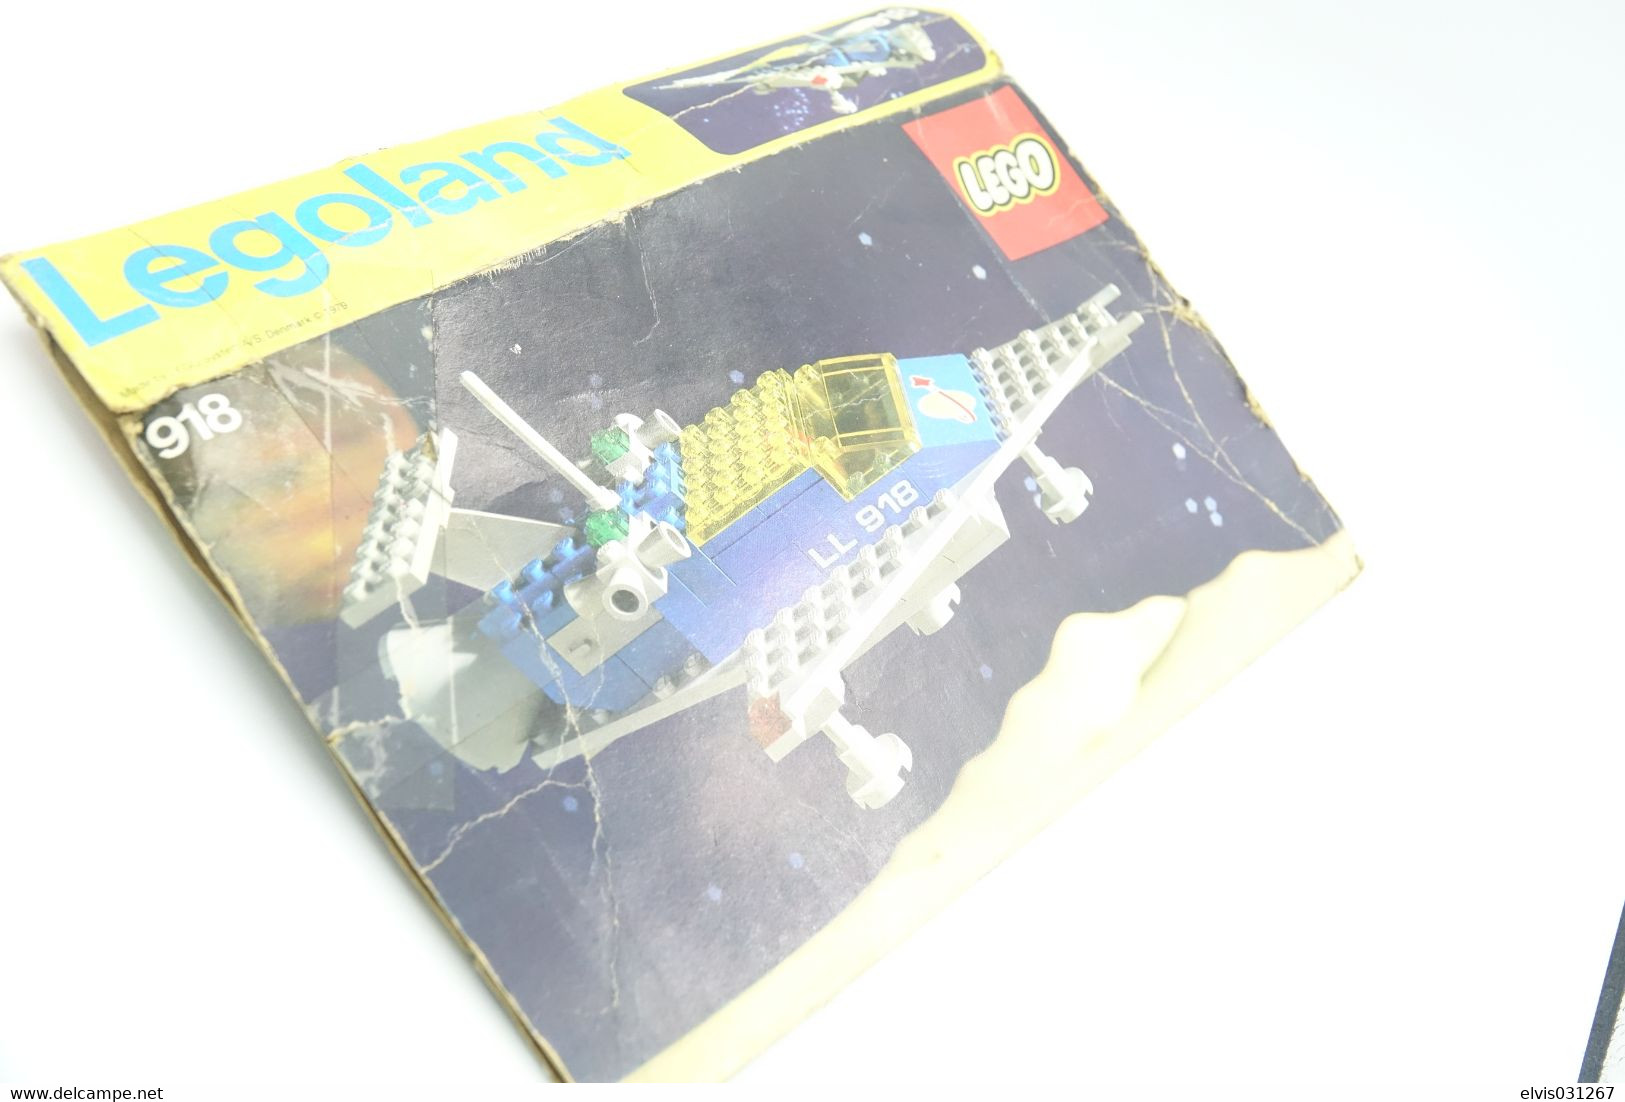 LEGO - 918 Space Transport box and instruction manual - Original Lego 1979 - Vintage